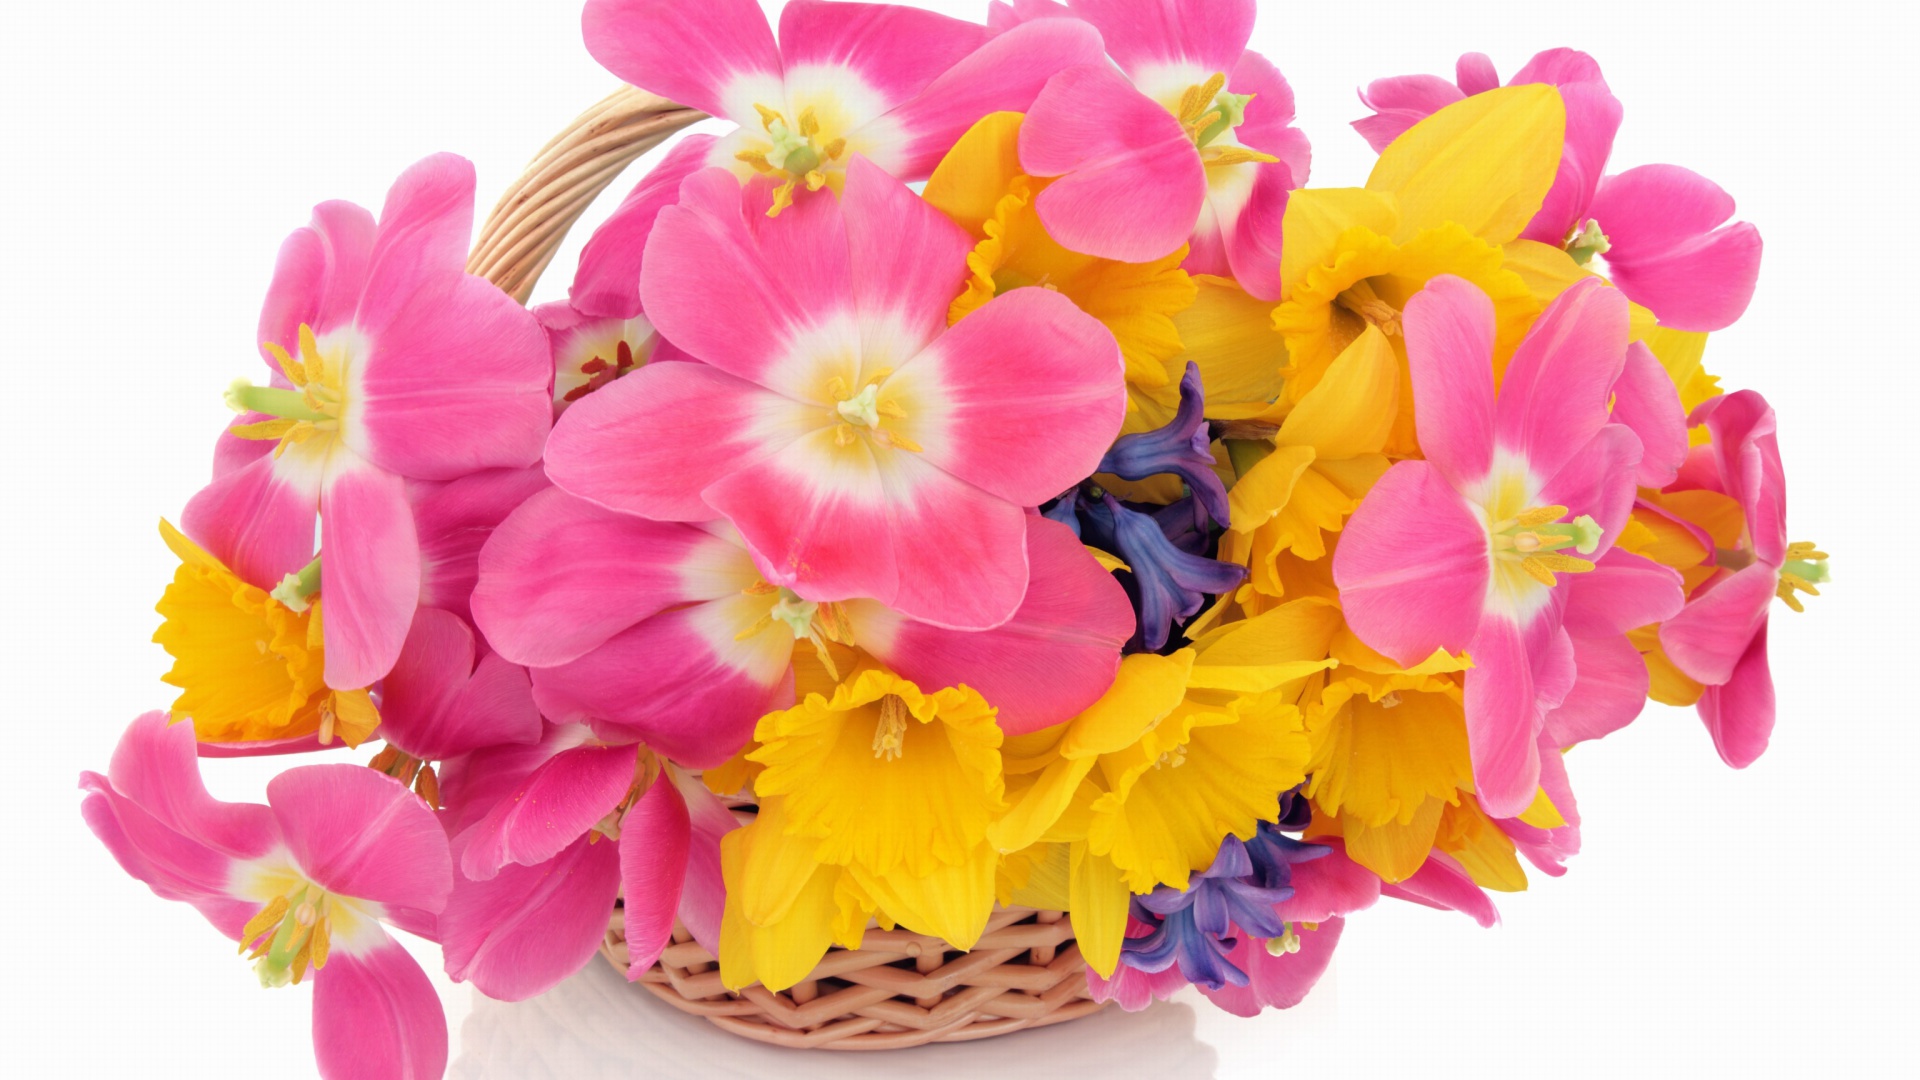 Обои Indoor Basket of Tulips and Daffodils 1920x1080